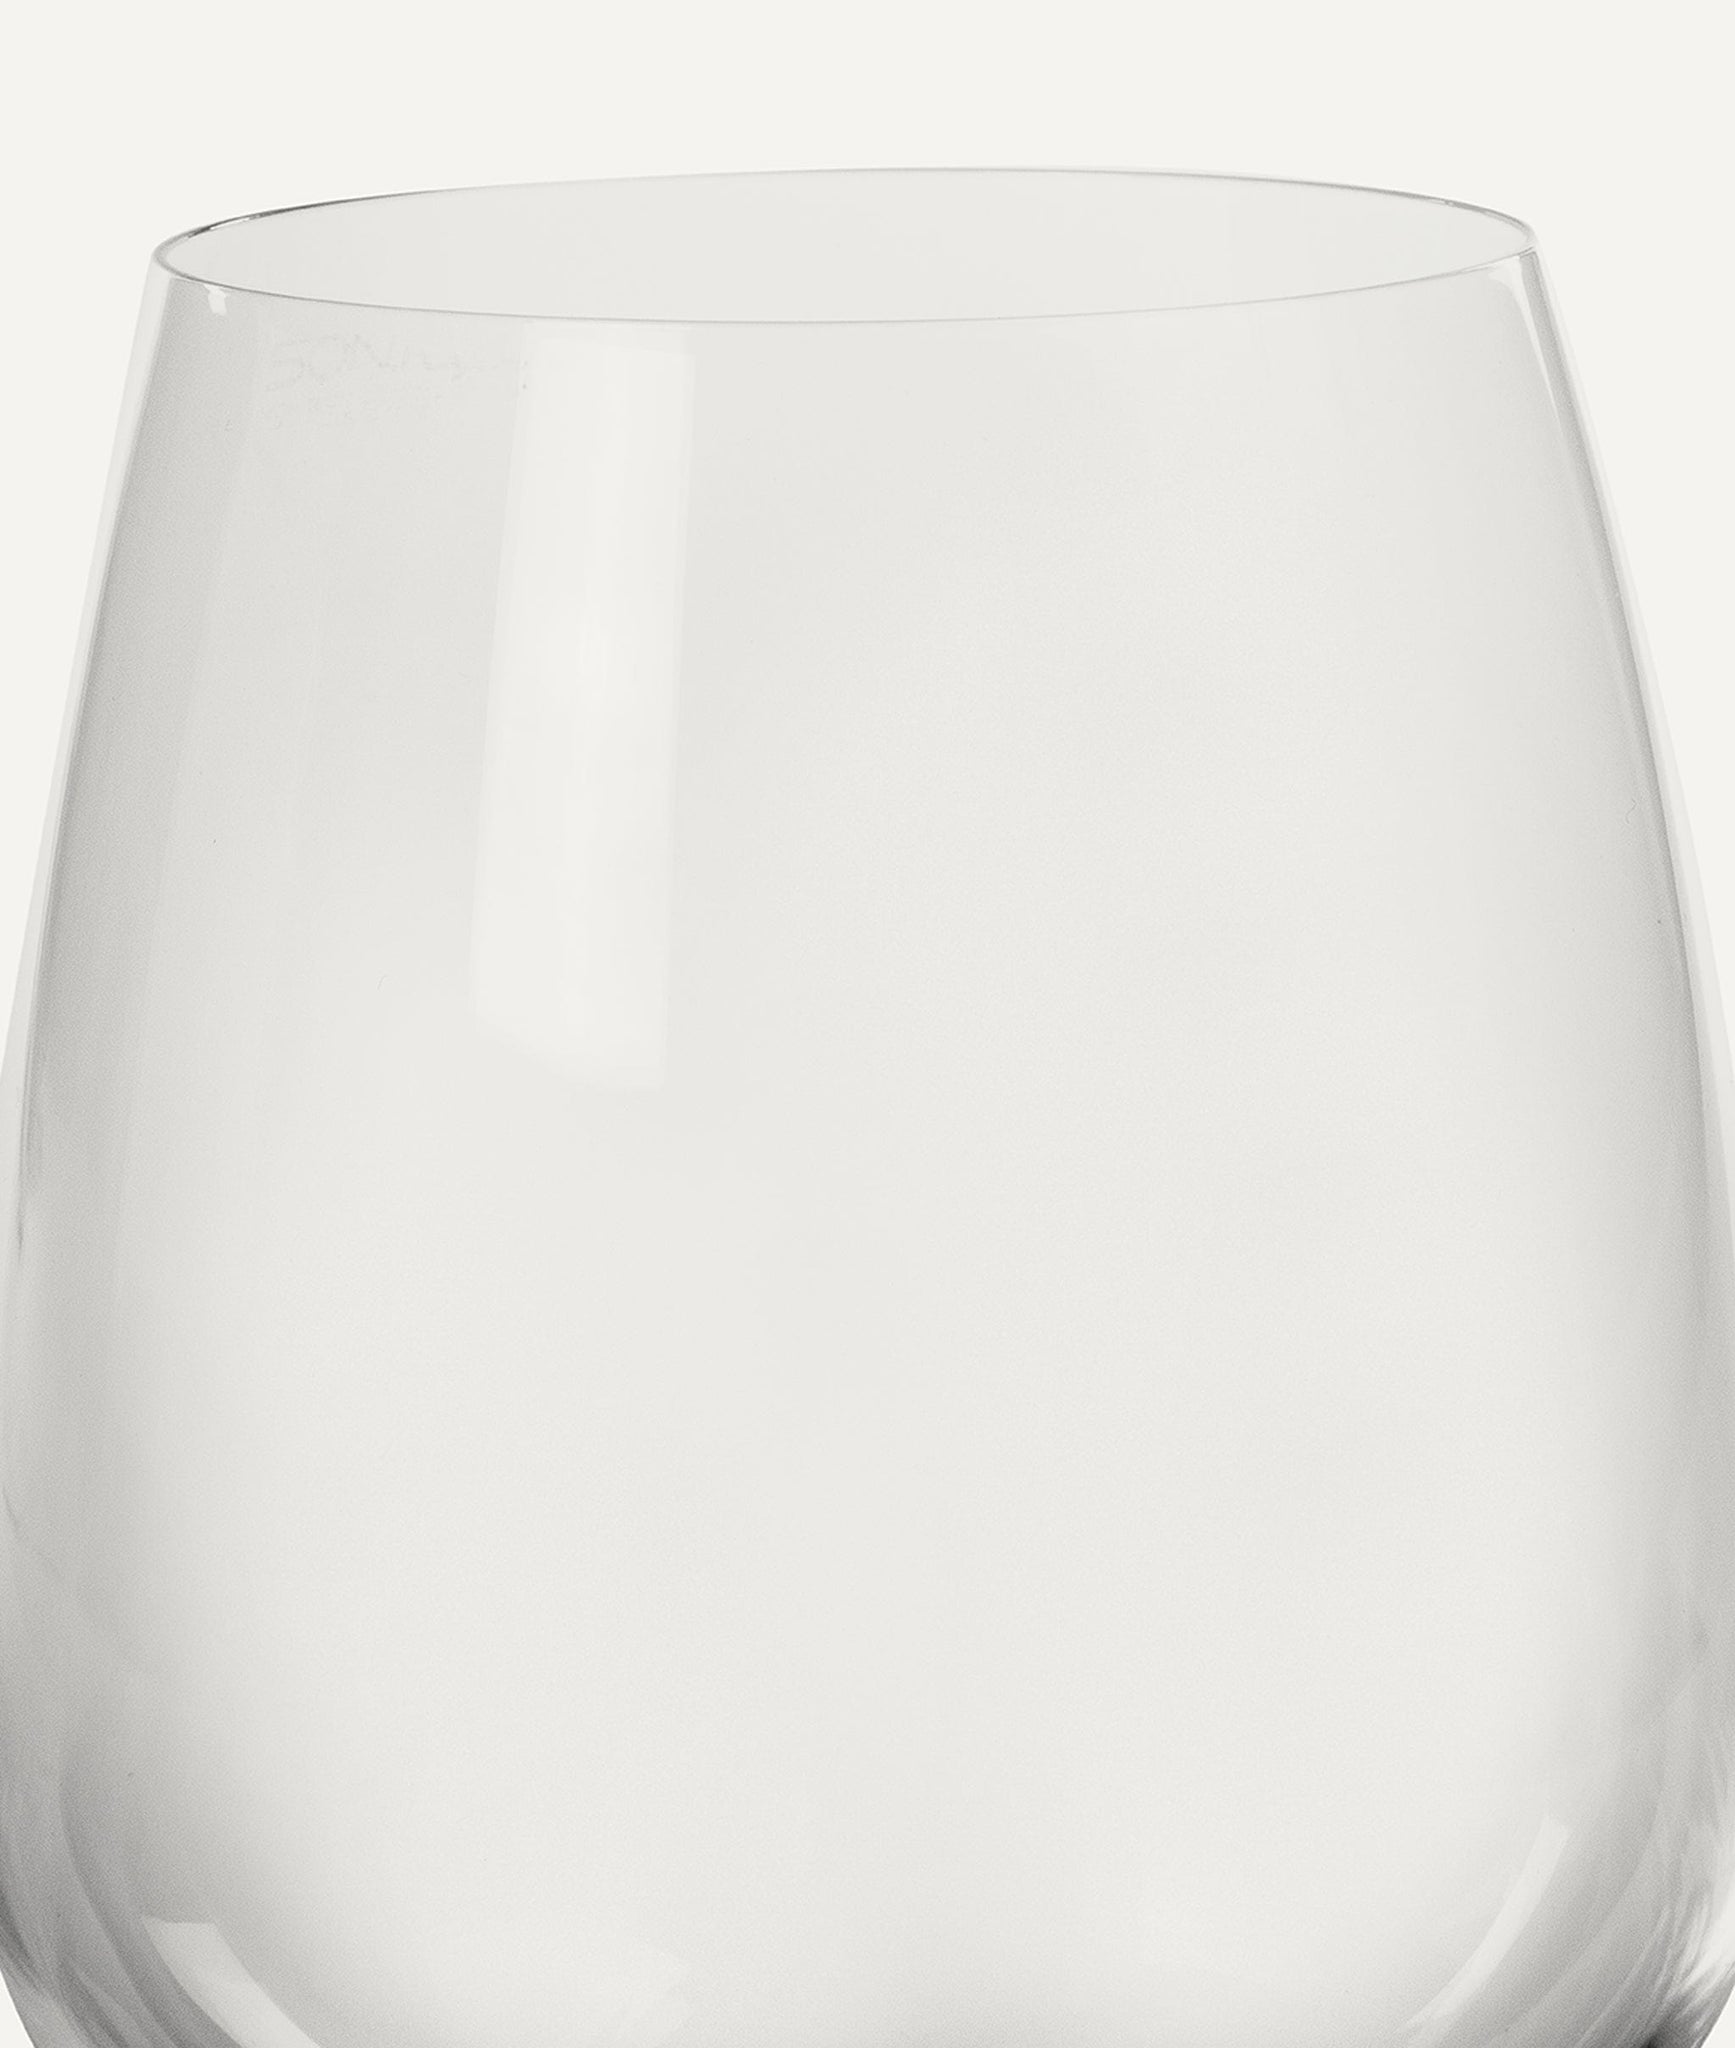 Chardonnay White Wine Glass - Set of 6